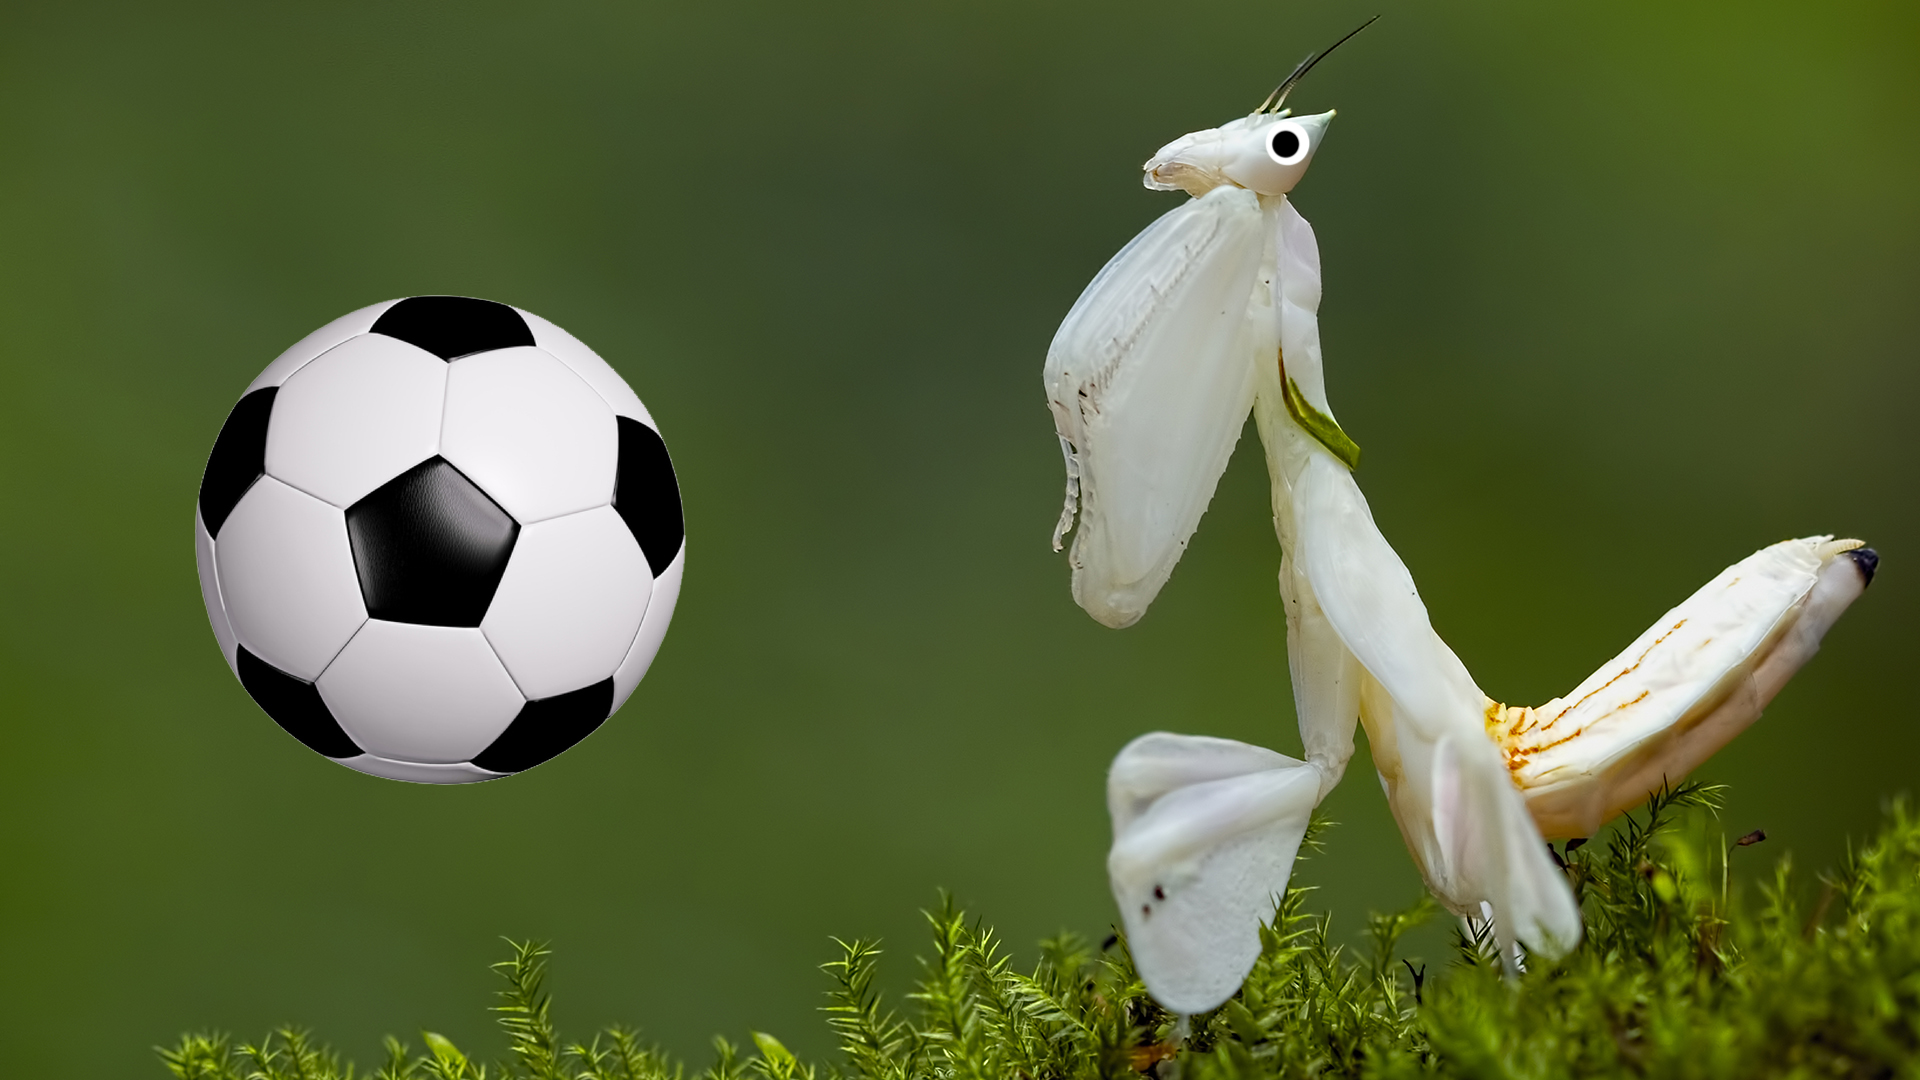 An Orchid Praying Mantis playing football